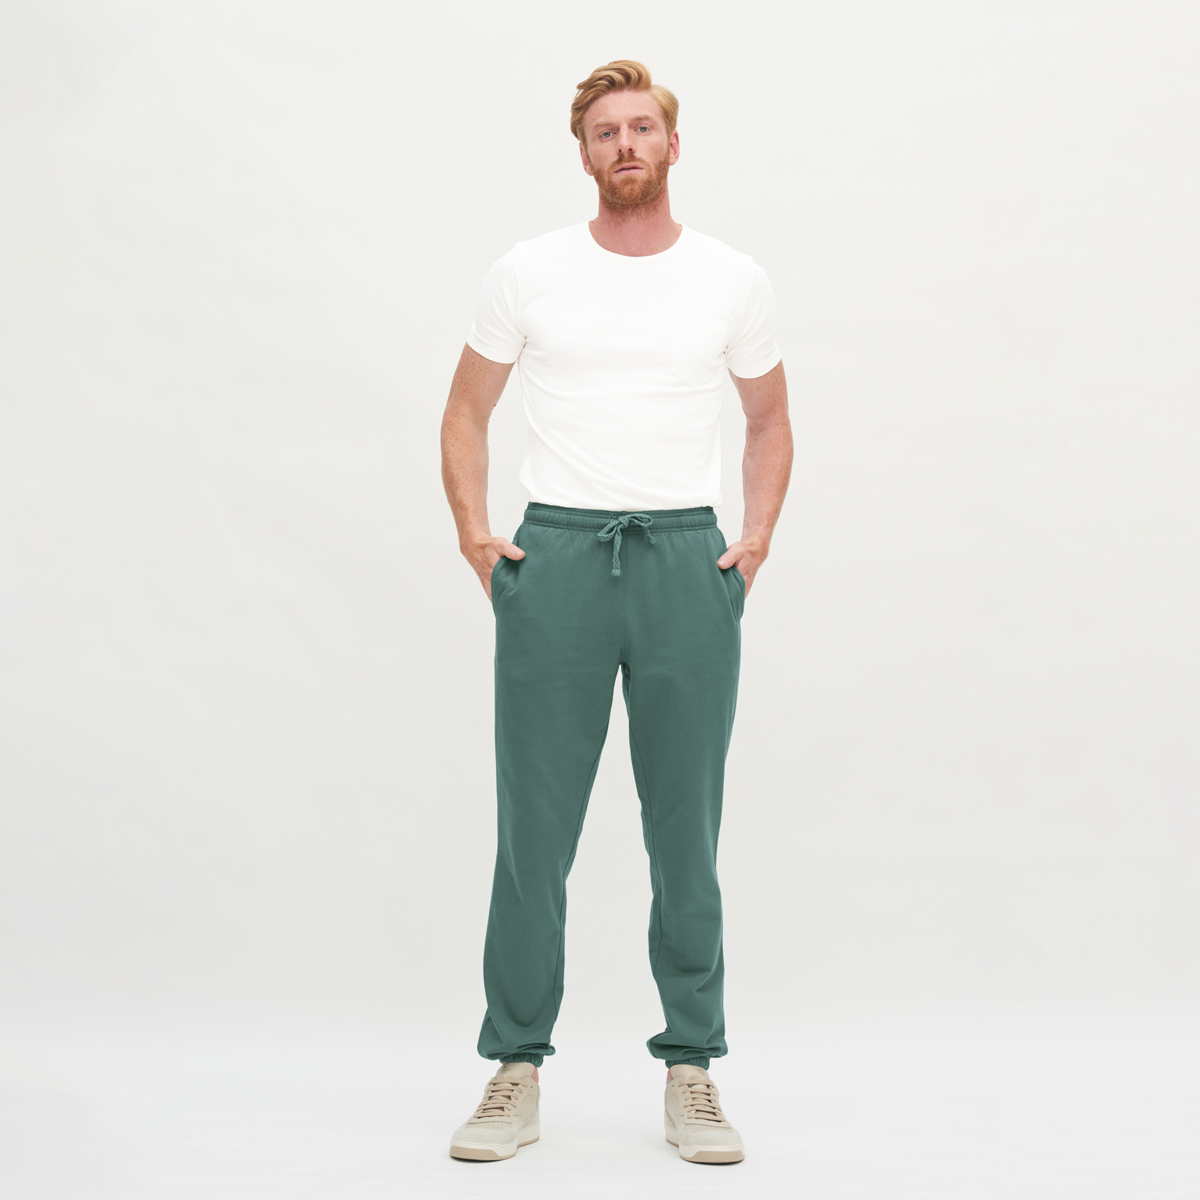 Green Men Sweatpants